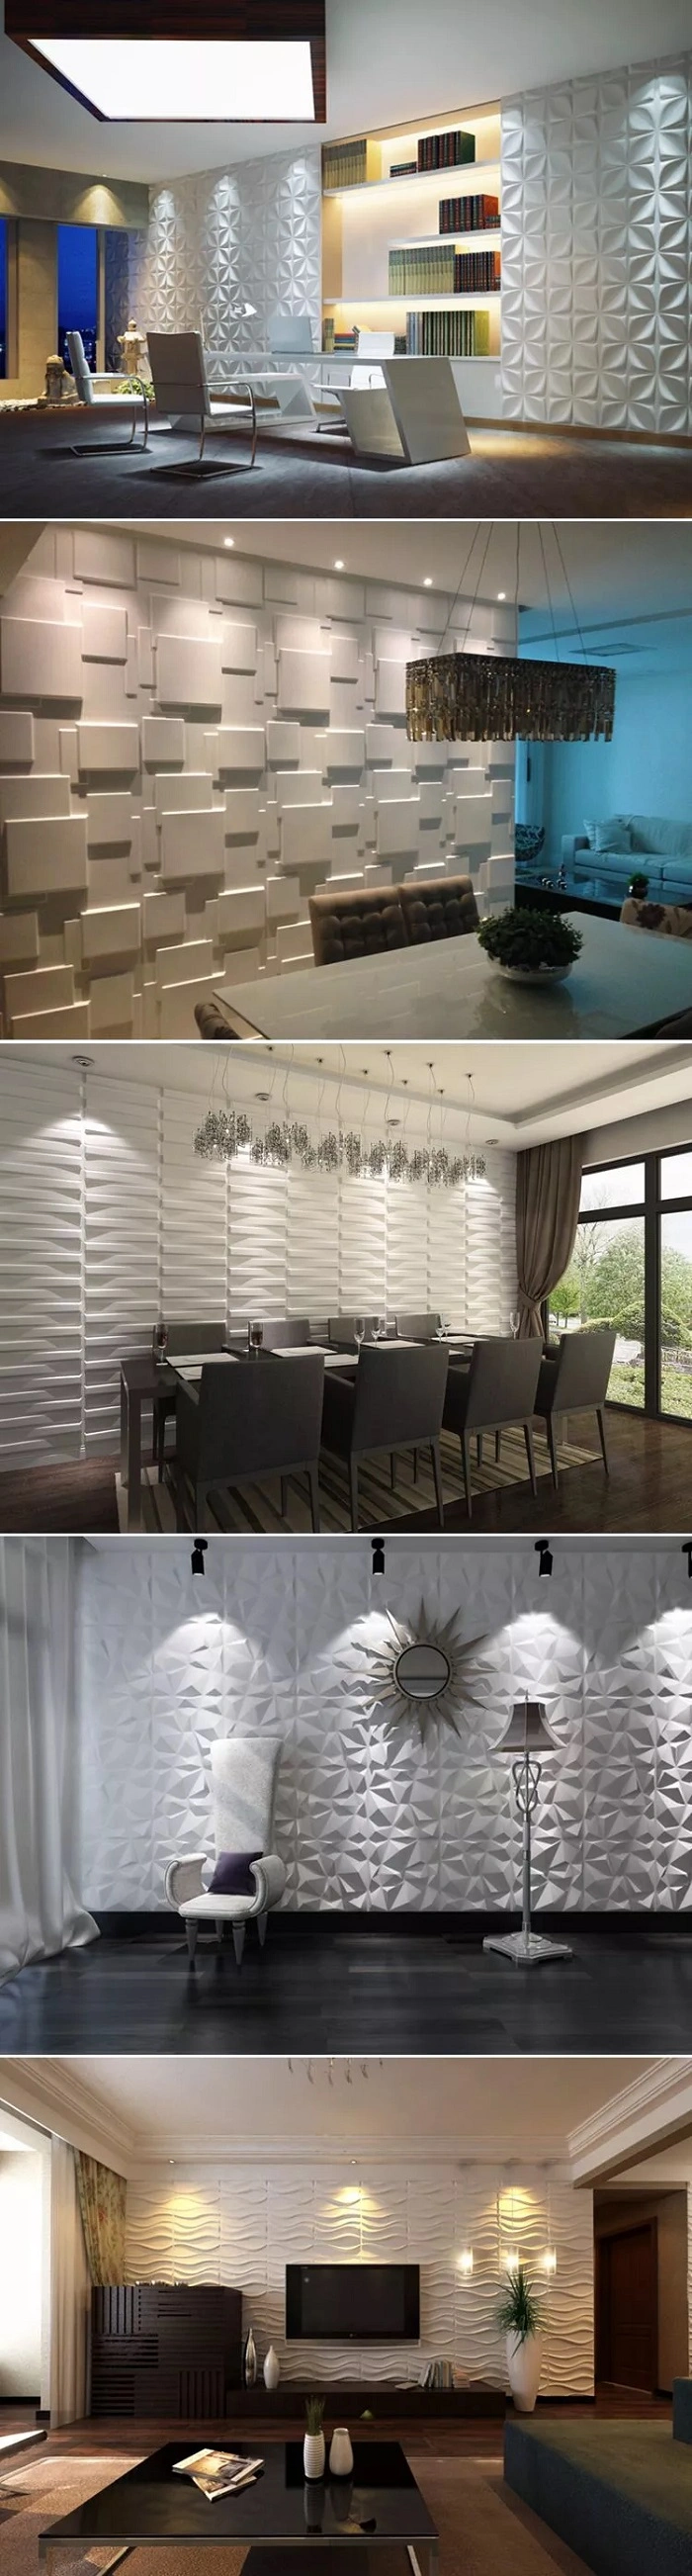 2020 Modern Wallart Decors Interior 3D Wall Panels for Any Wall Decoration